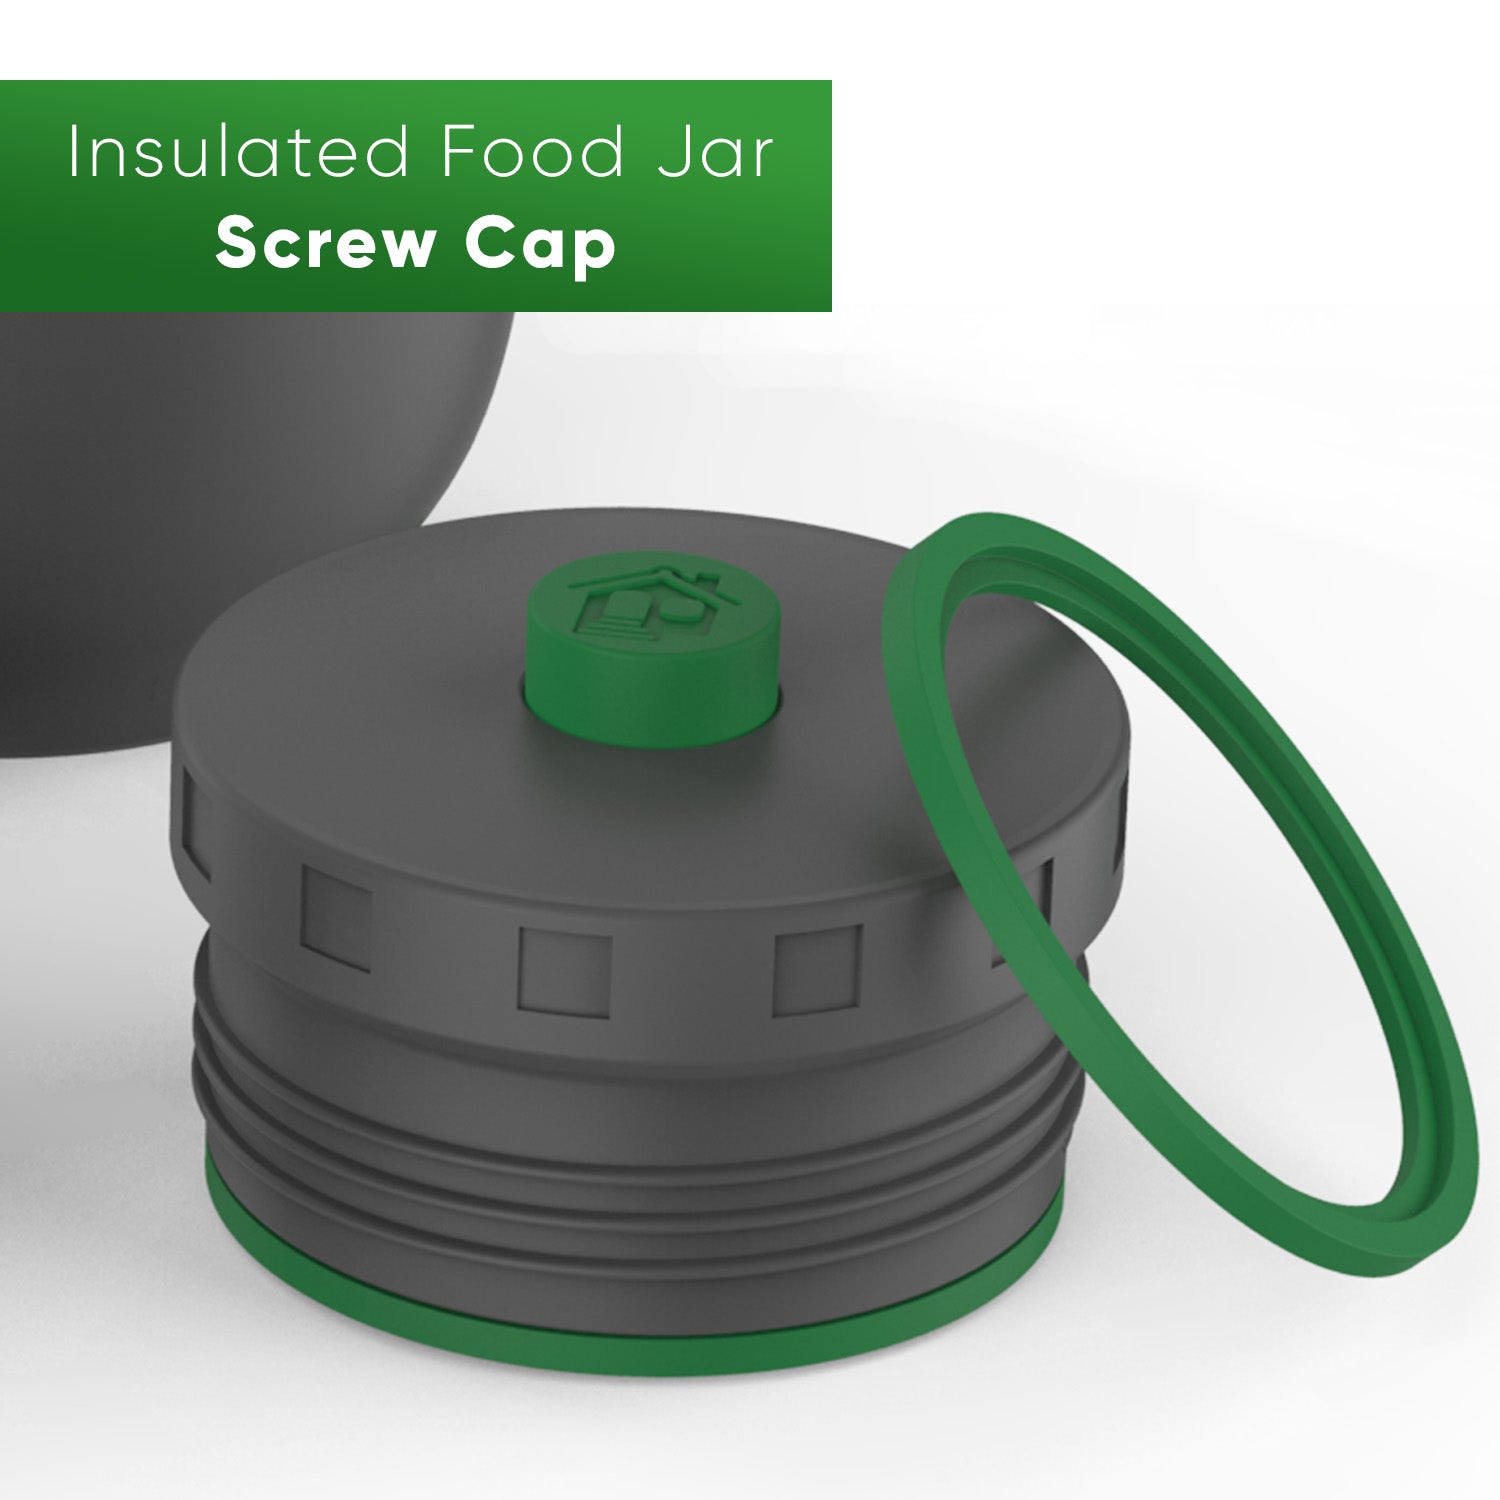 Insulated Food Jar - Screw Cap